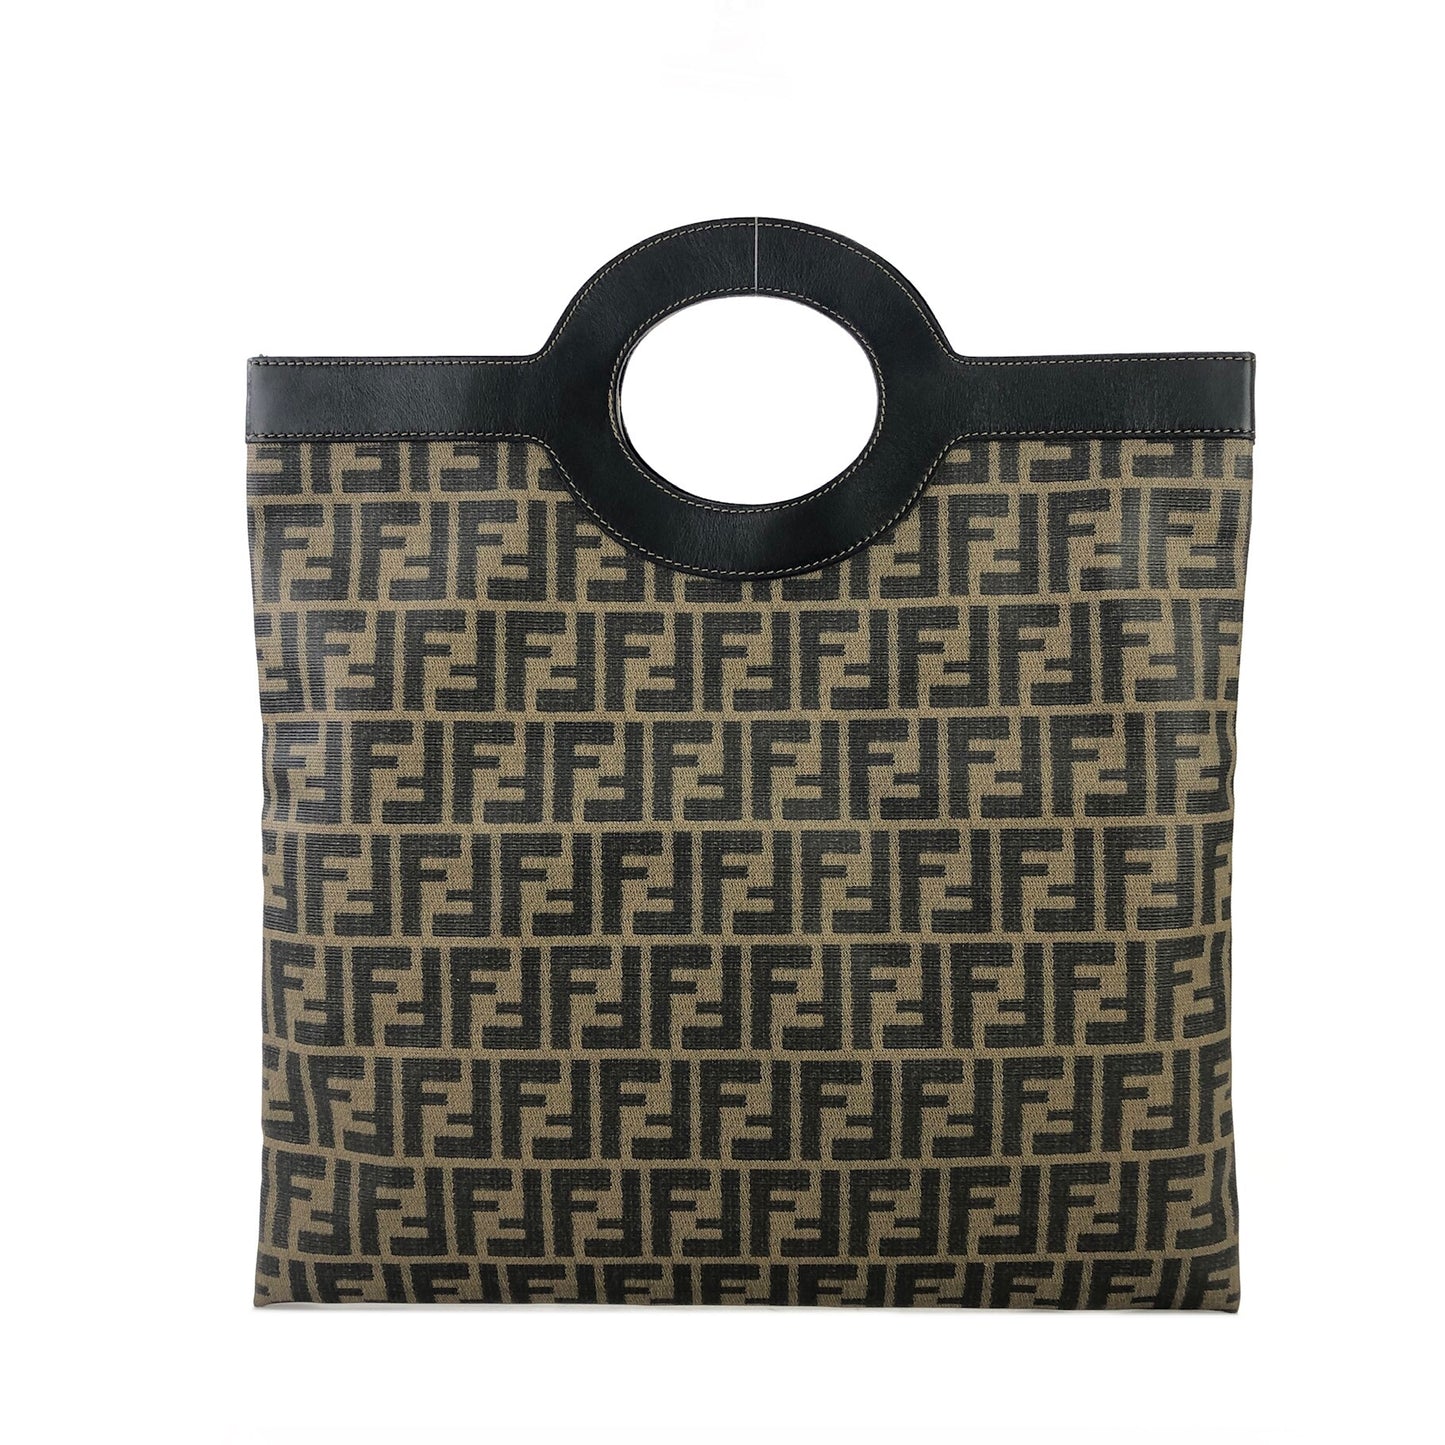 FENDI Zucca logo embossed leather PVC handbag black x brown Vintage Old jibnzr